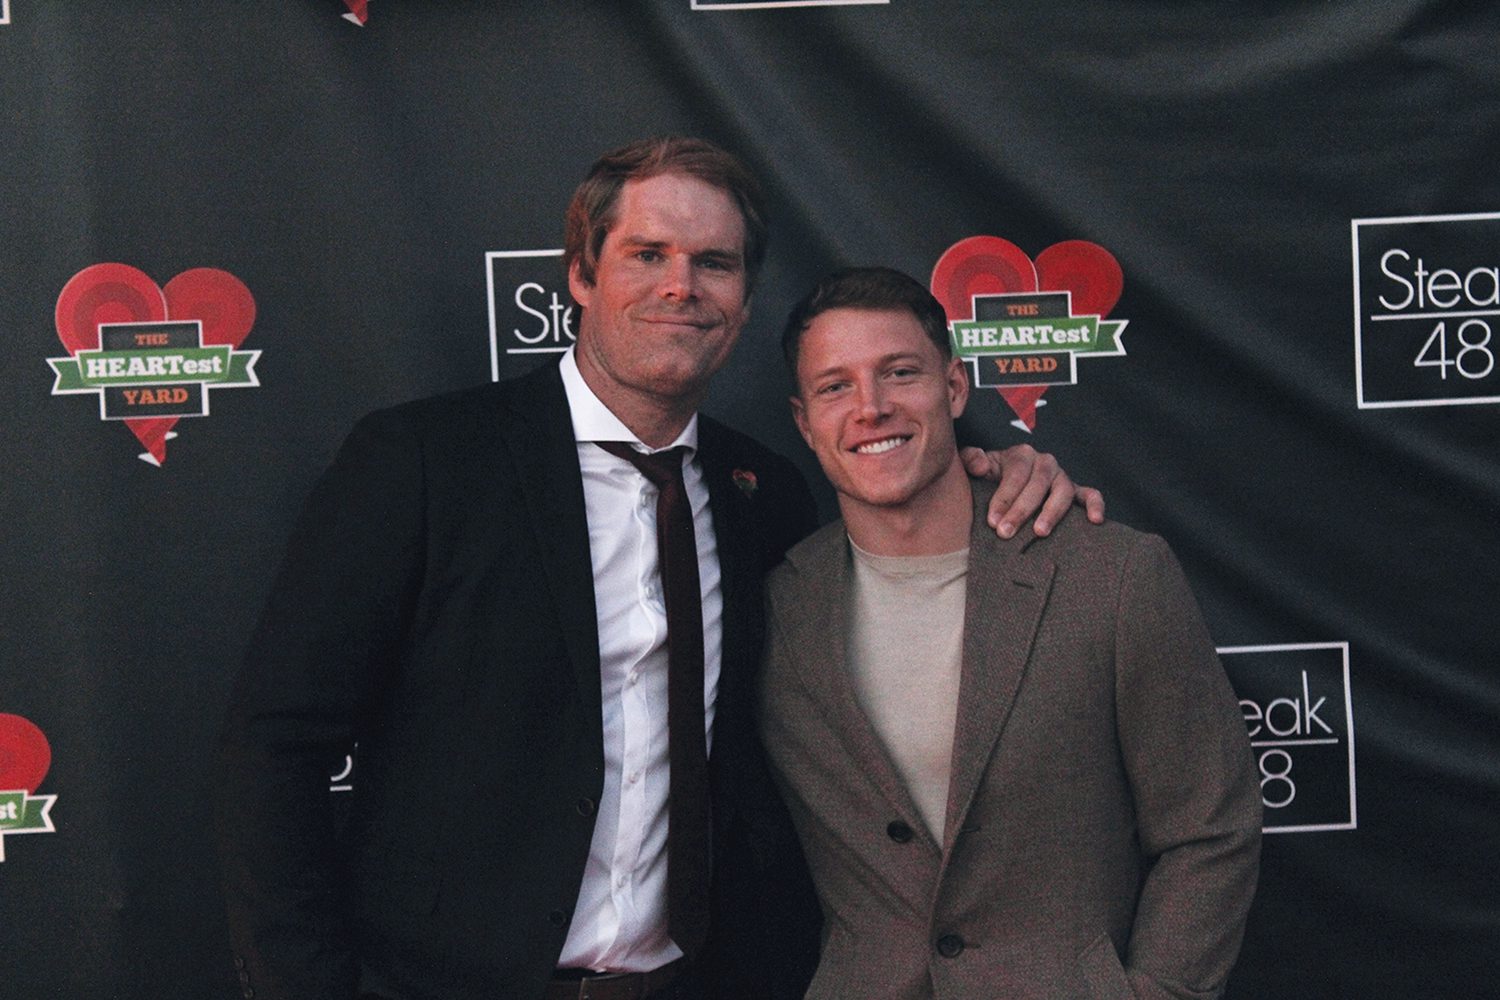 Greg Olsen and Christian McCaffrey attend the Heartest Yard fundraiser at Steak 48.